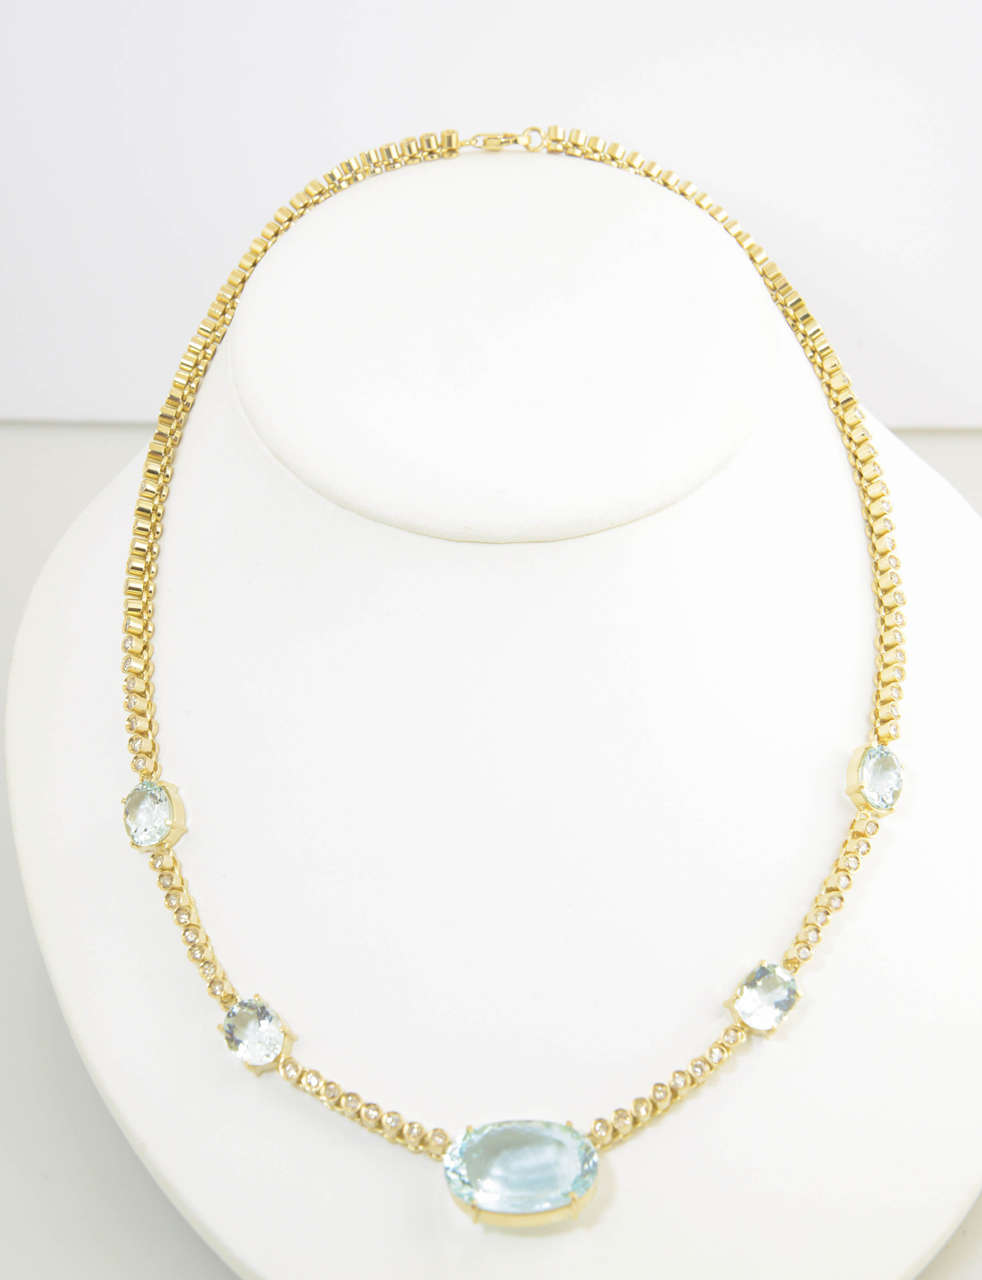 Necklace features bezel set diamonds and 5 prong set aquamarines set in 18k gold. The largest aqua is 3/4